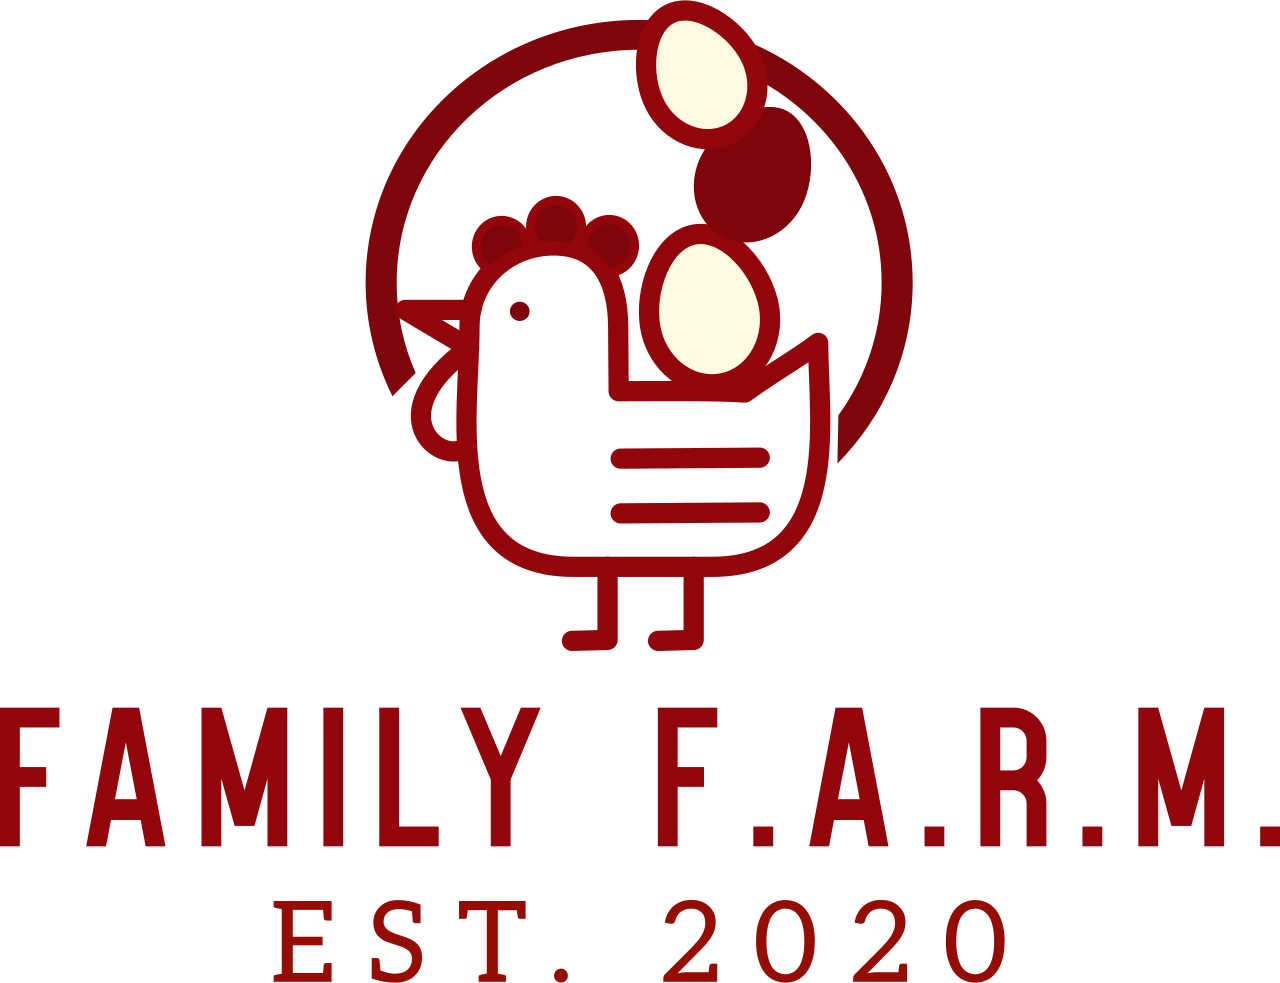 Family F.A.R.M.'s web page